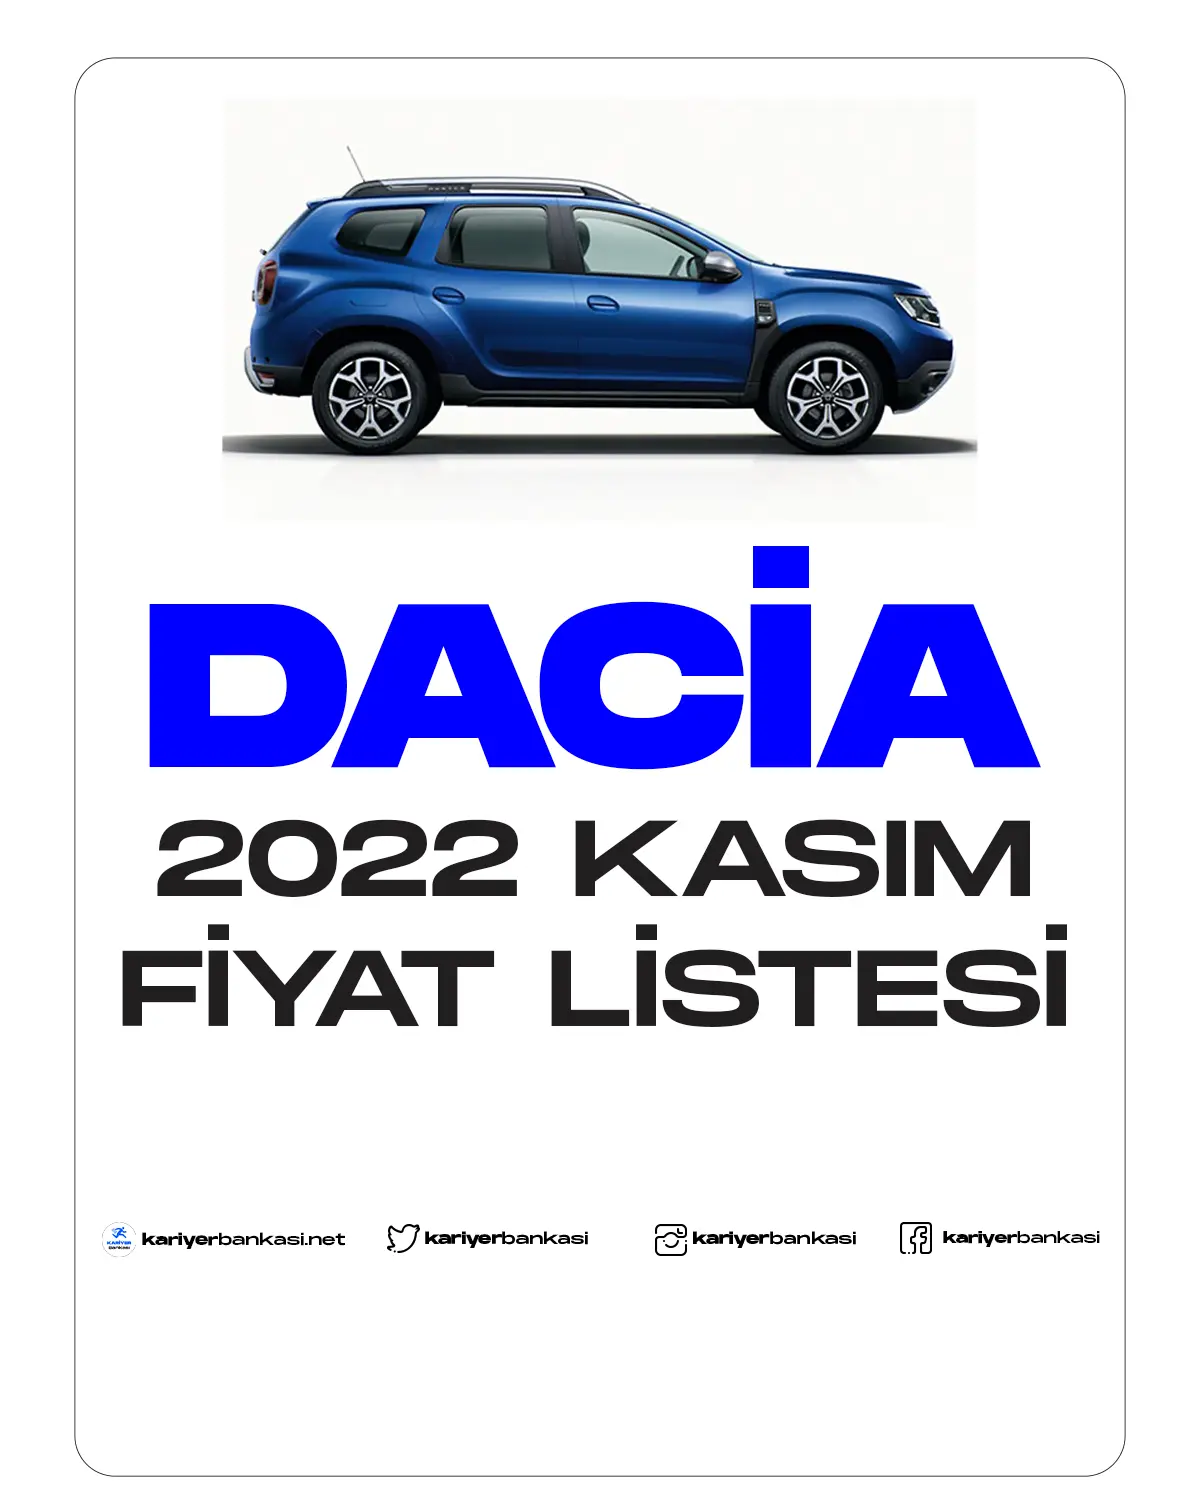 Dacia fiyat listesi